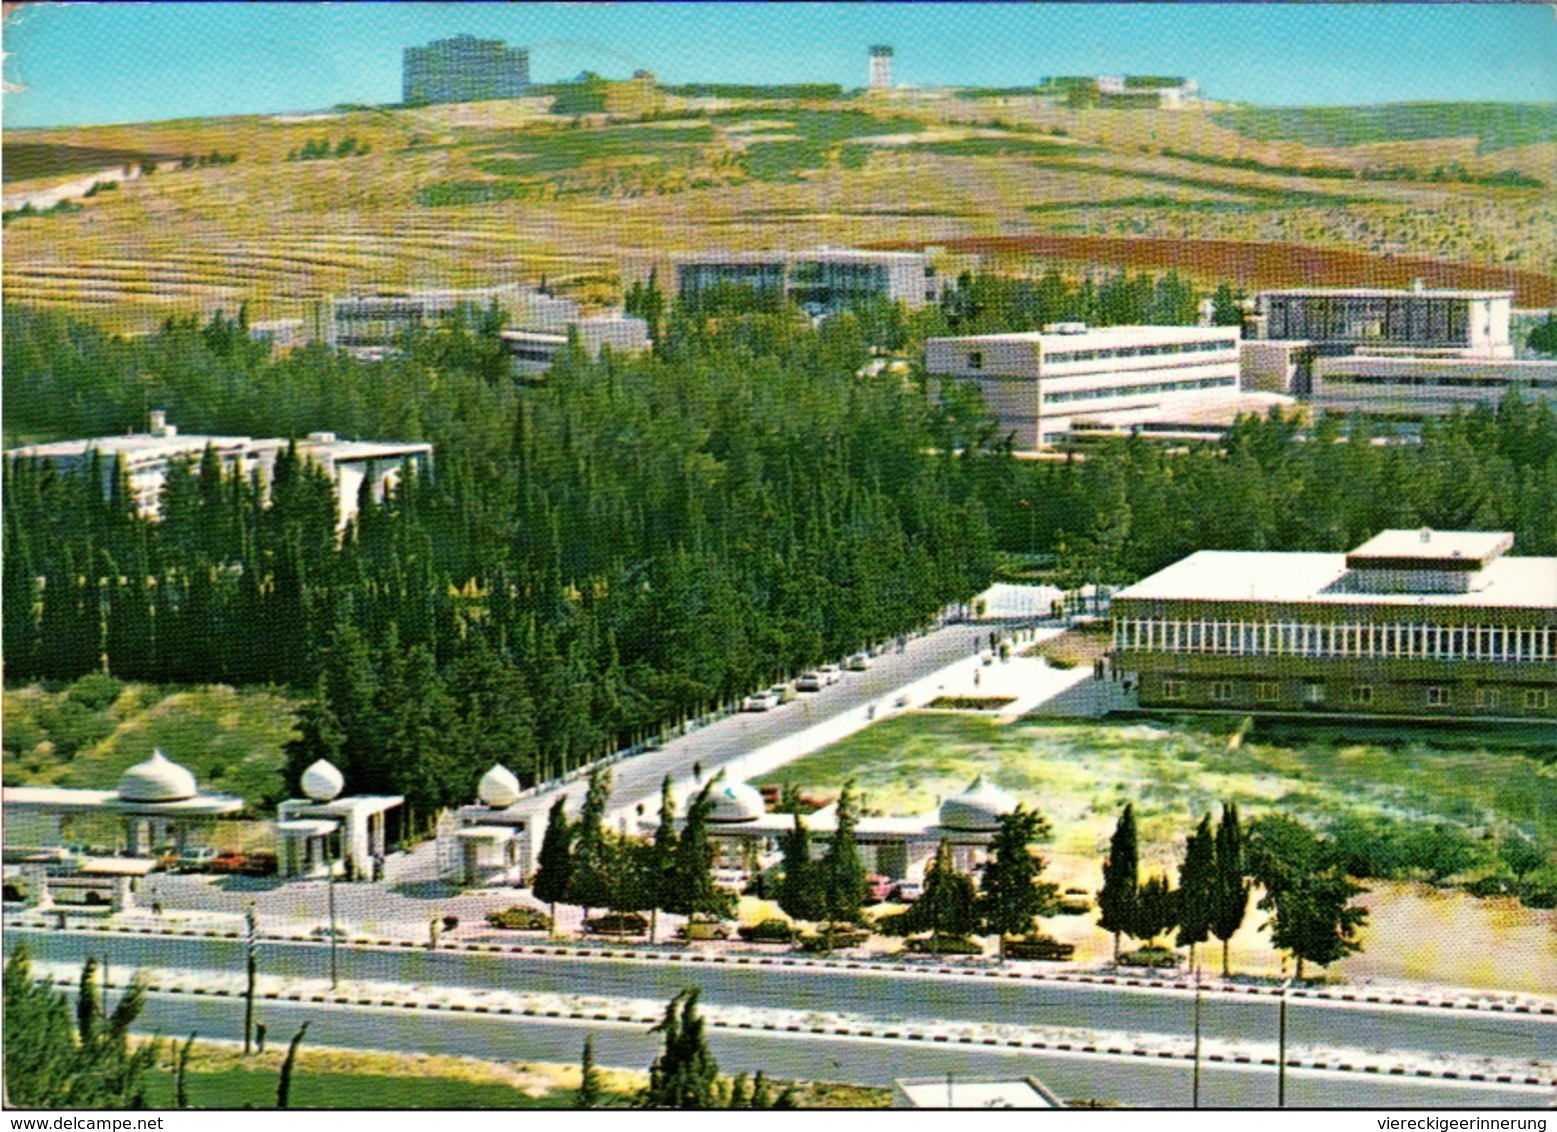 !  Postcard From Jordan, Jordanien Amman, Universität, University, Universite - Jordanie